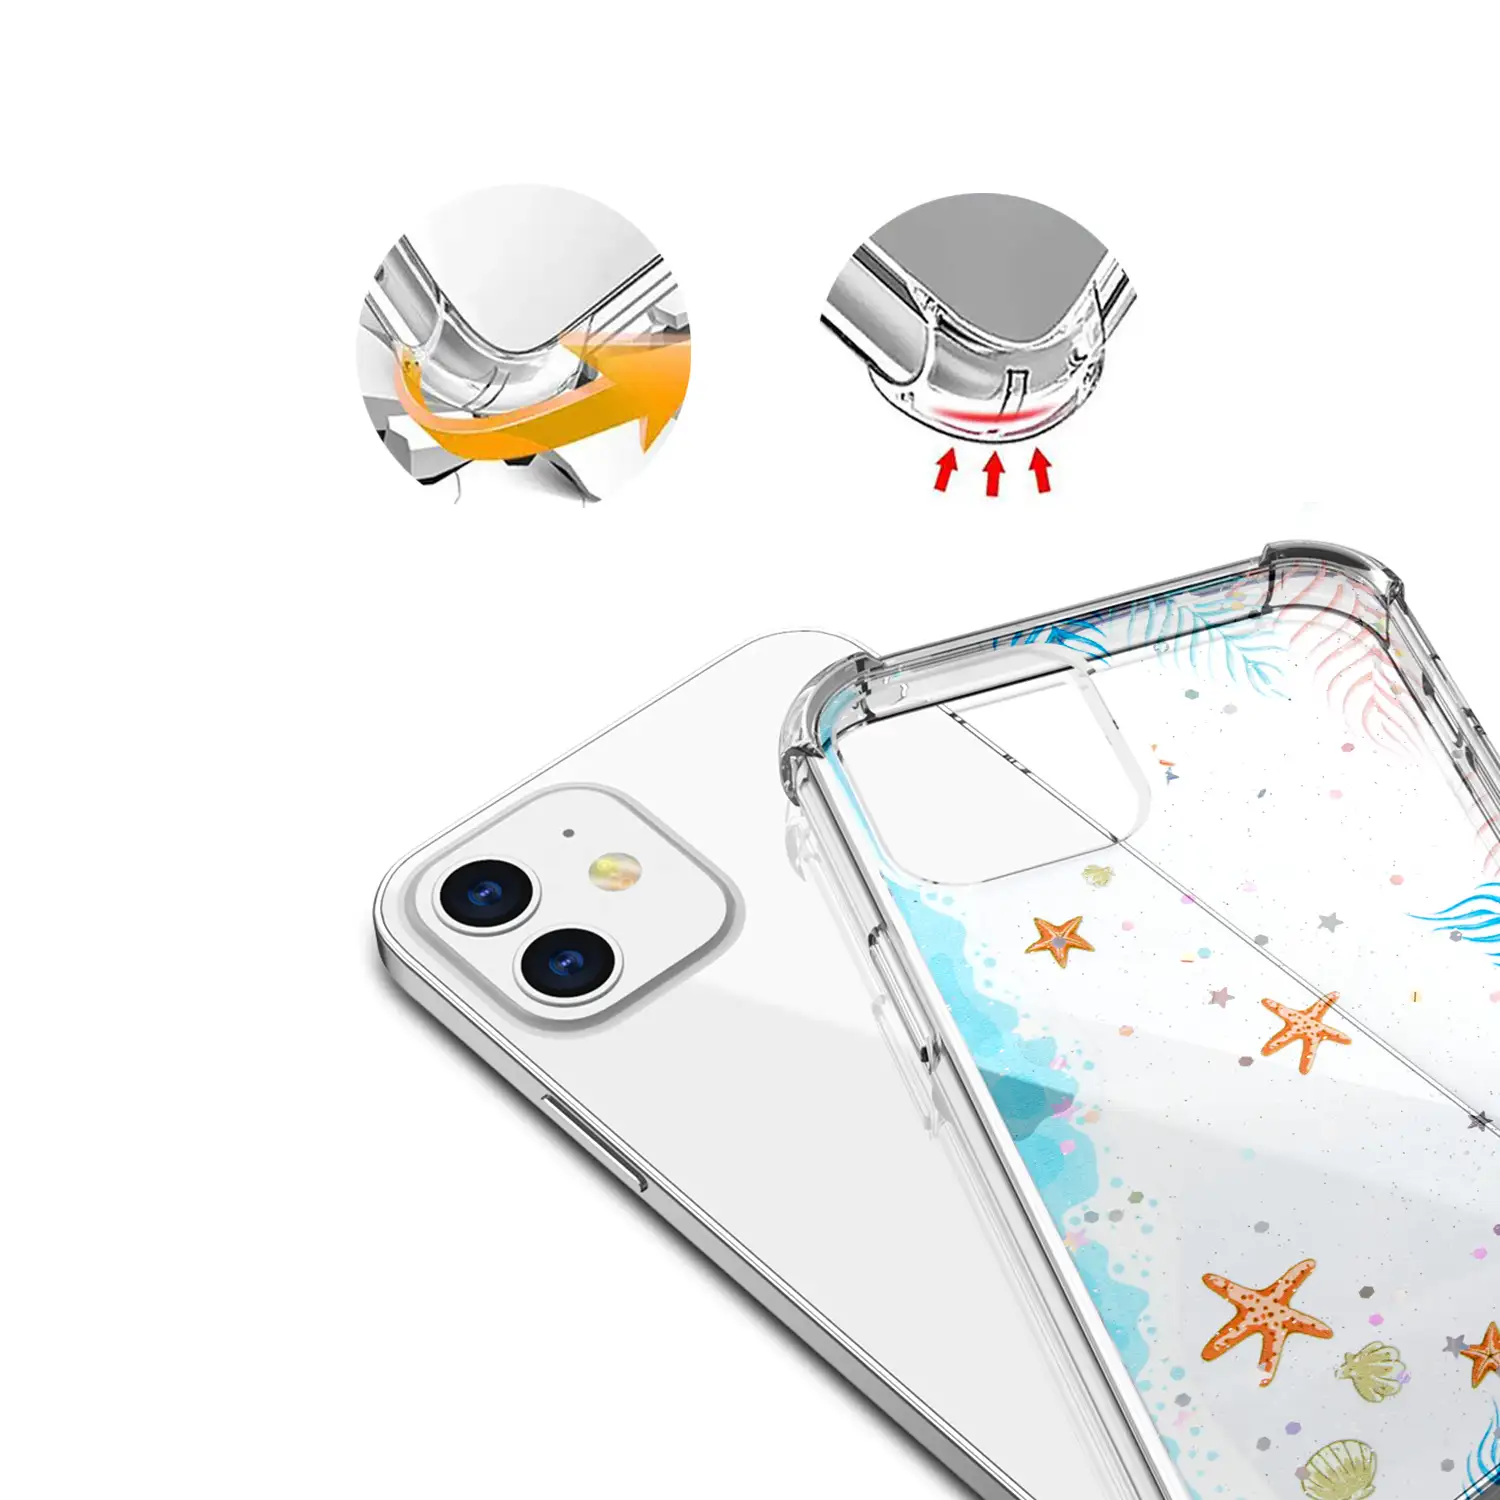 Carcasa de TPU de alta protección con diseño estrellas de mar para iPhone 12 Mini